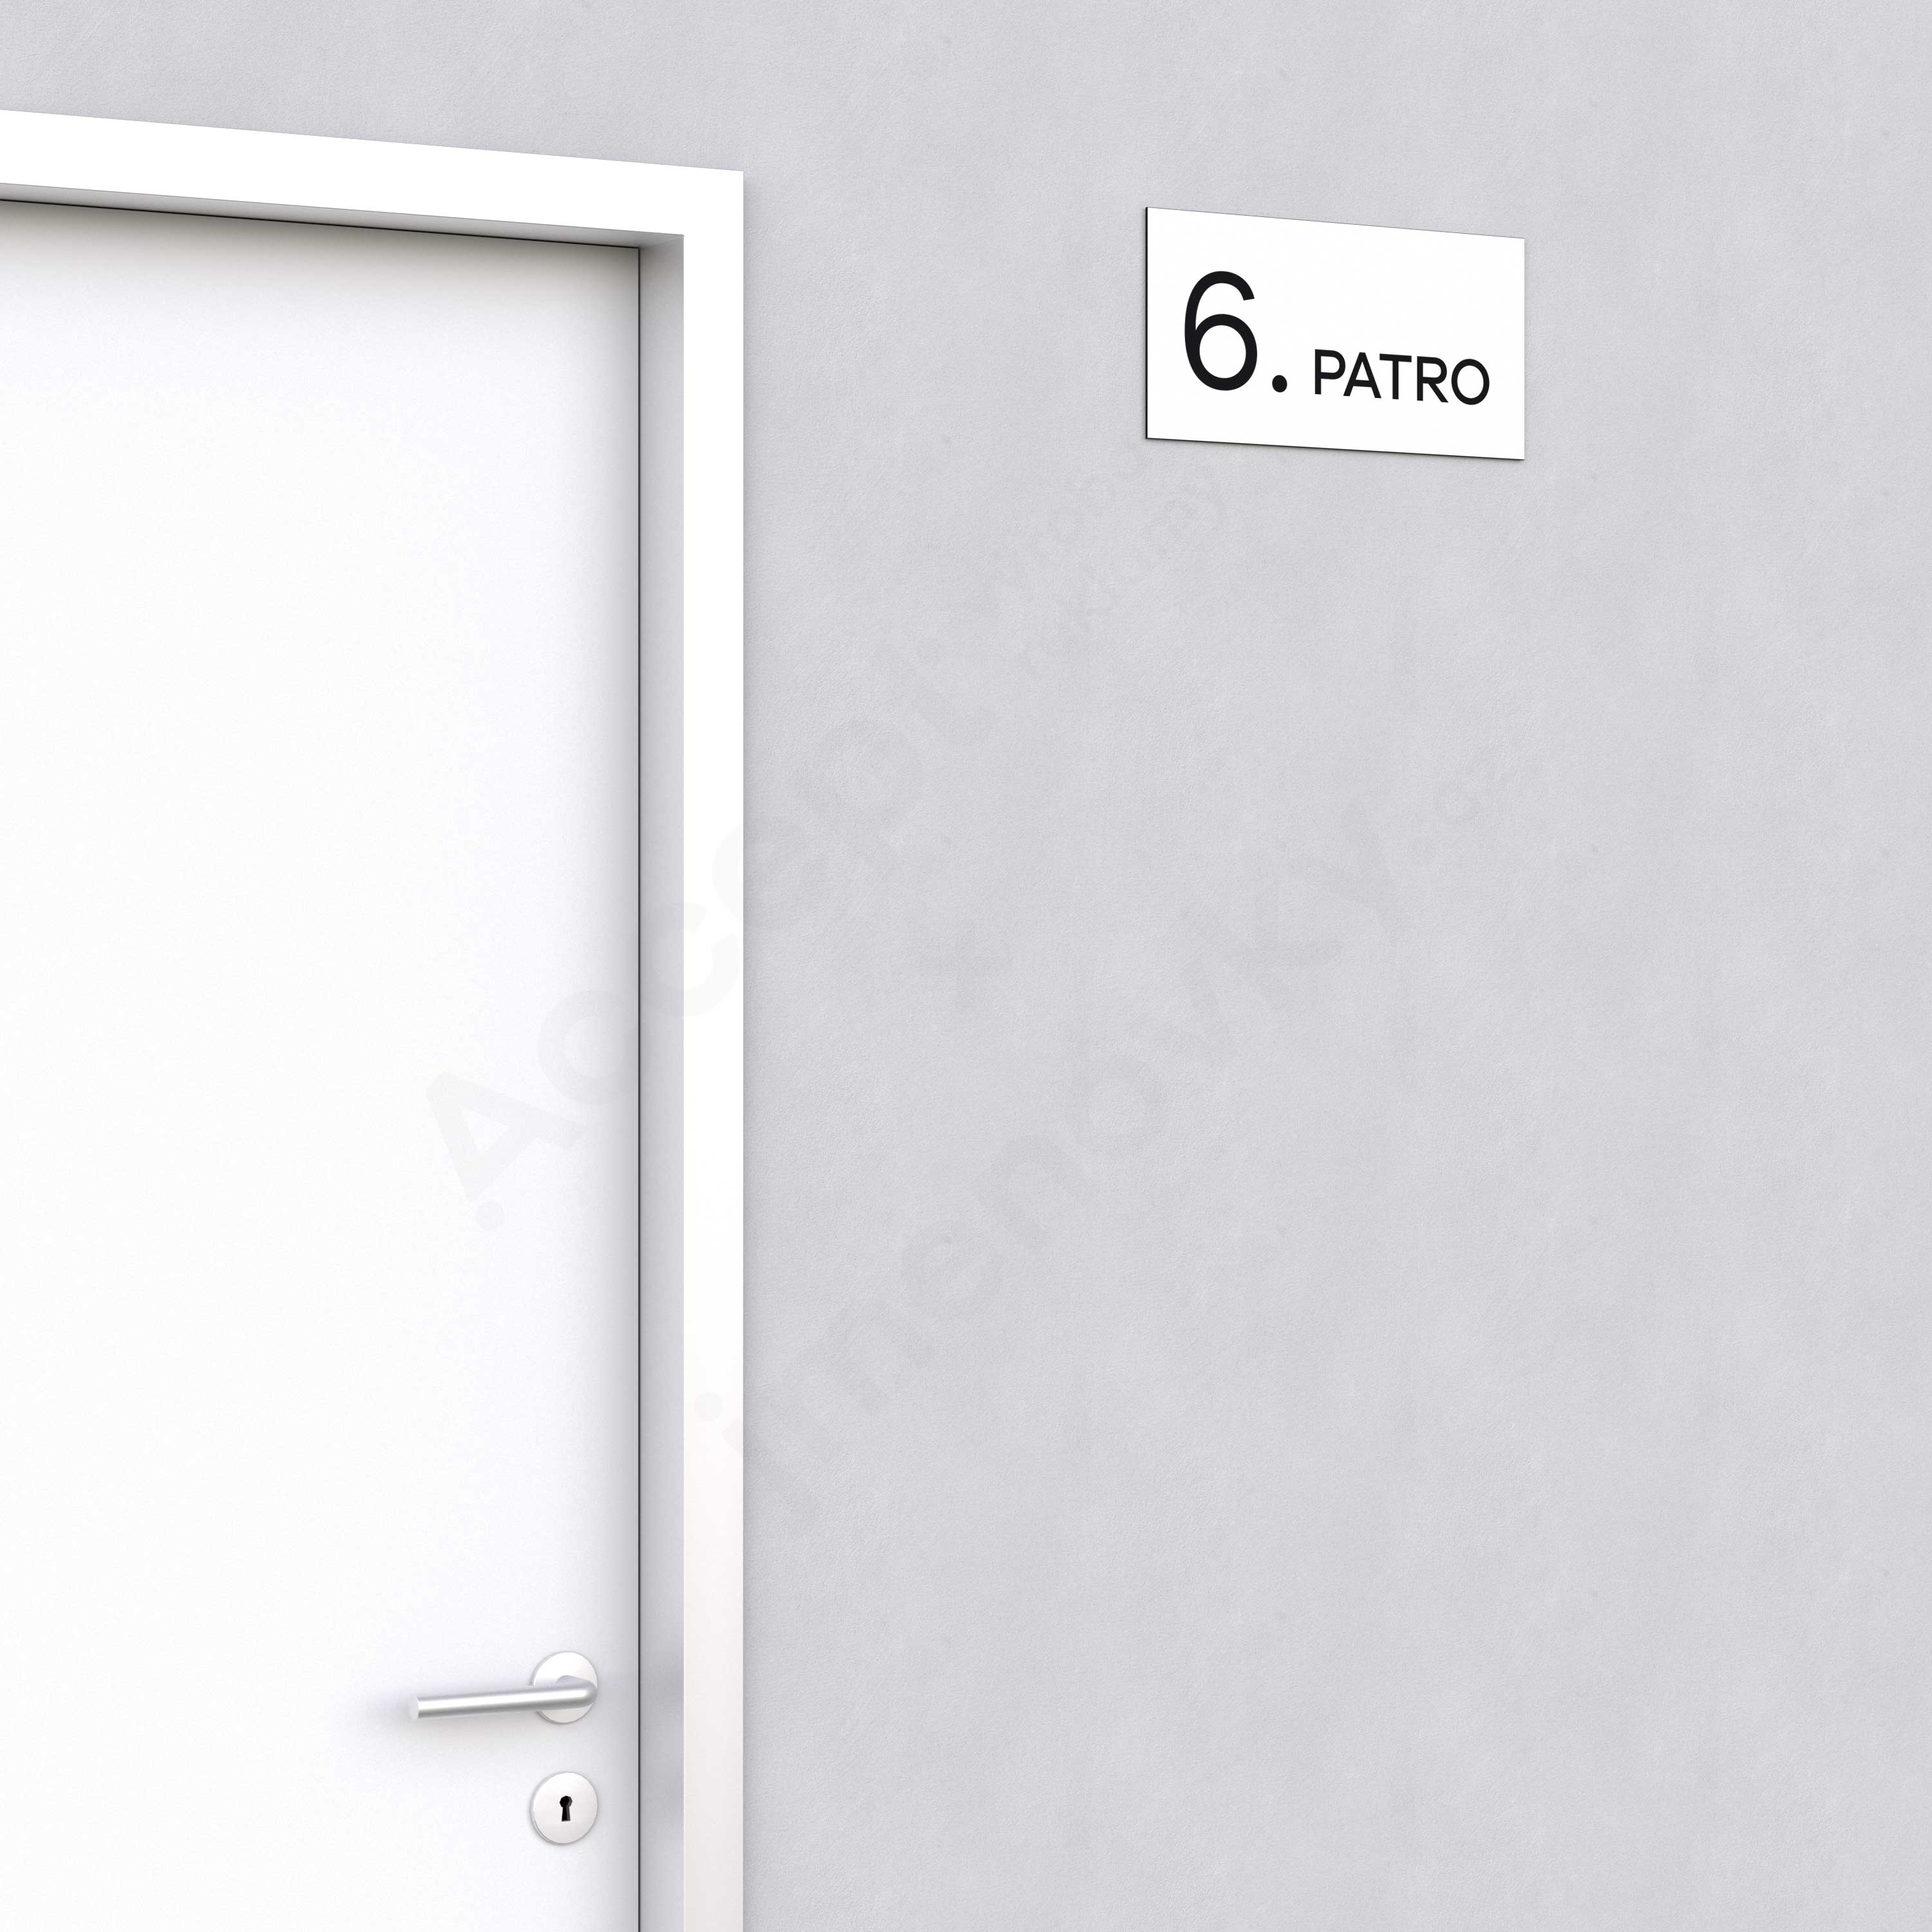 Označení podlaží "6. PATRO" - bílá tabulka - černý popis - náhled